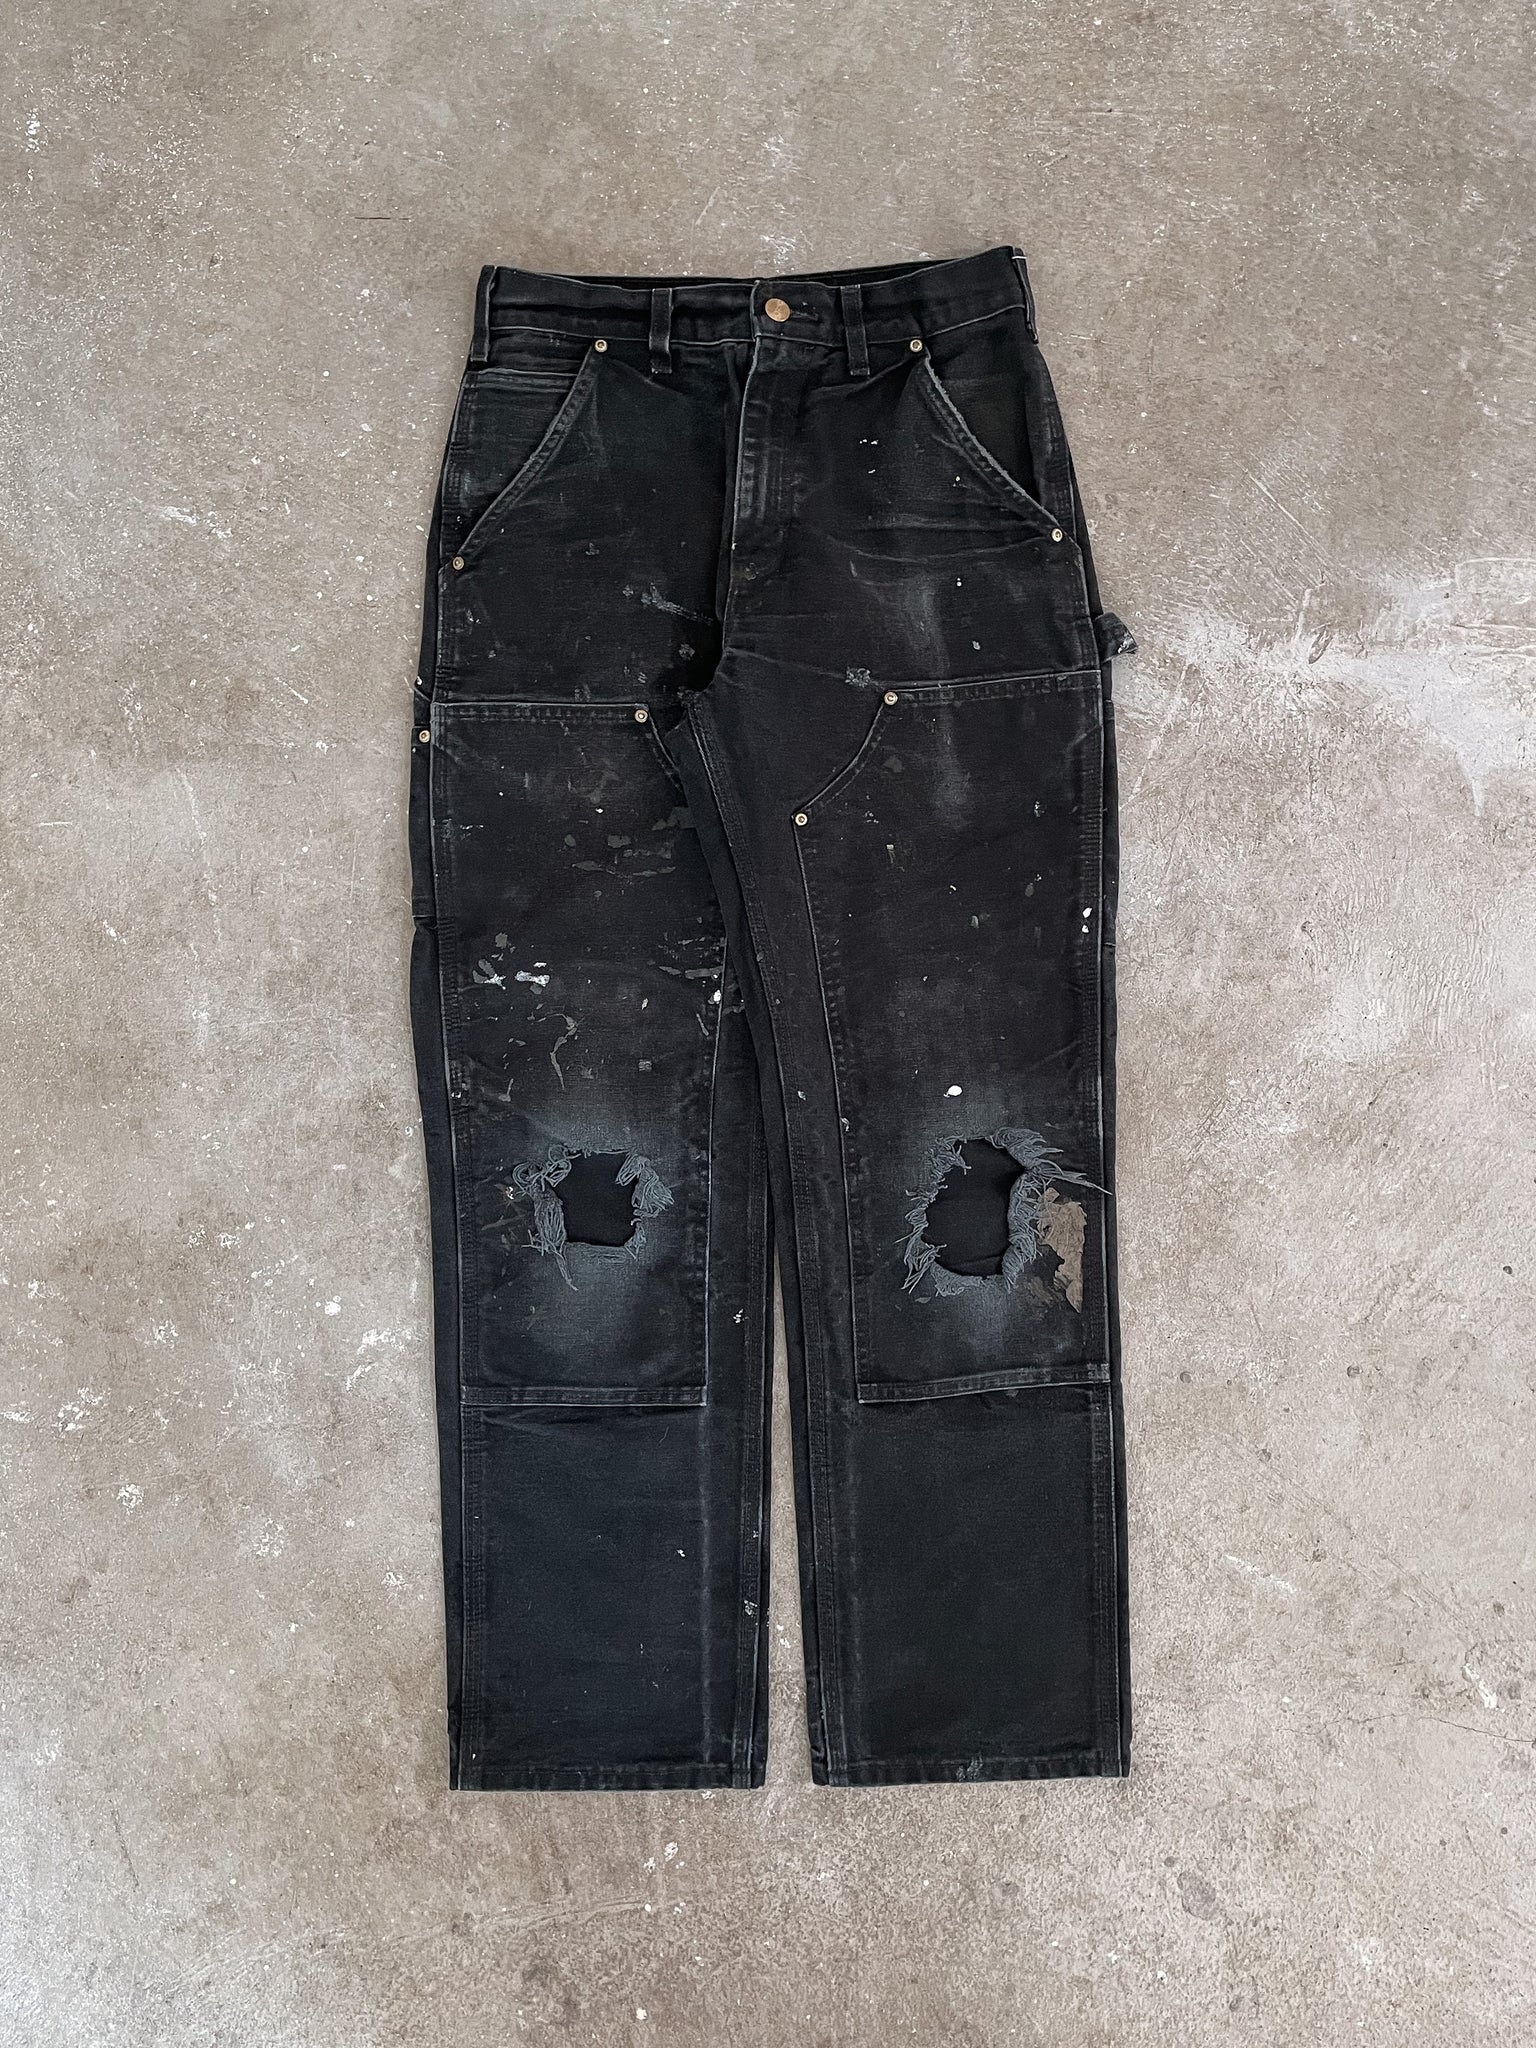 Carhartt B01 Black Double Knee Work Pants (27X29) – DAMAGED GLITTER